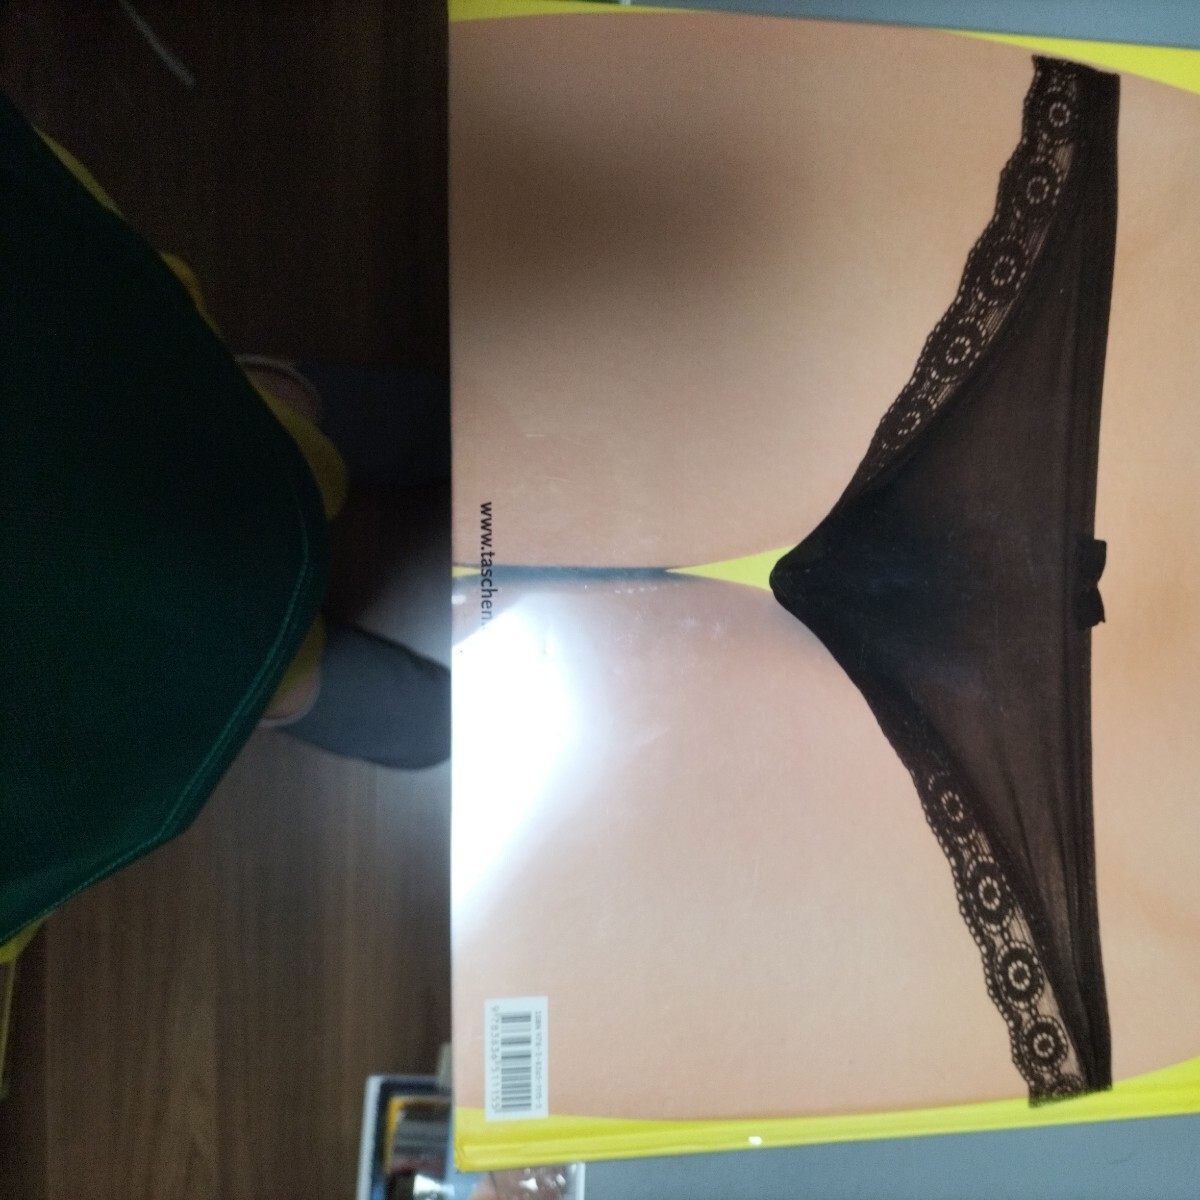  photoalbum abroad gravure nude TASCHEN large book@THE big butt book